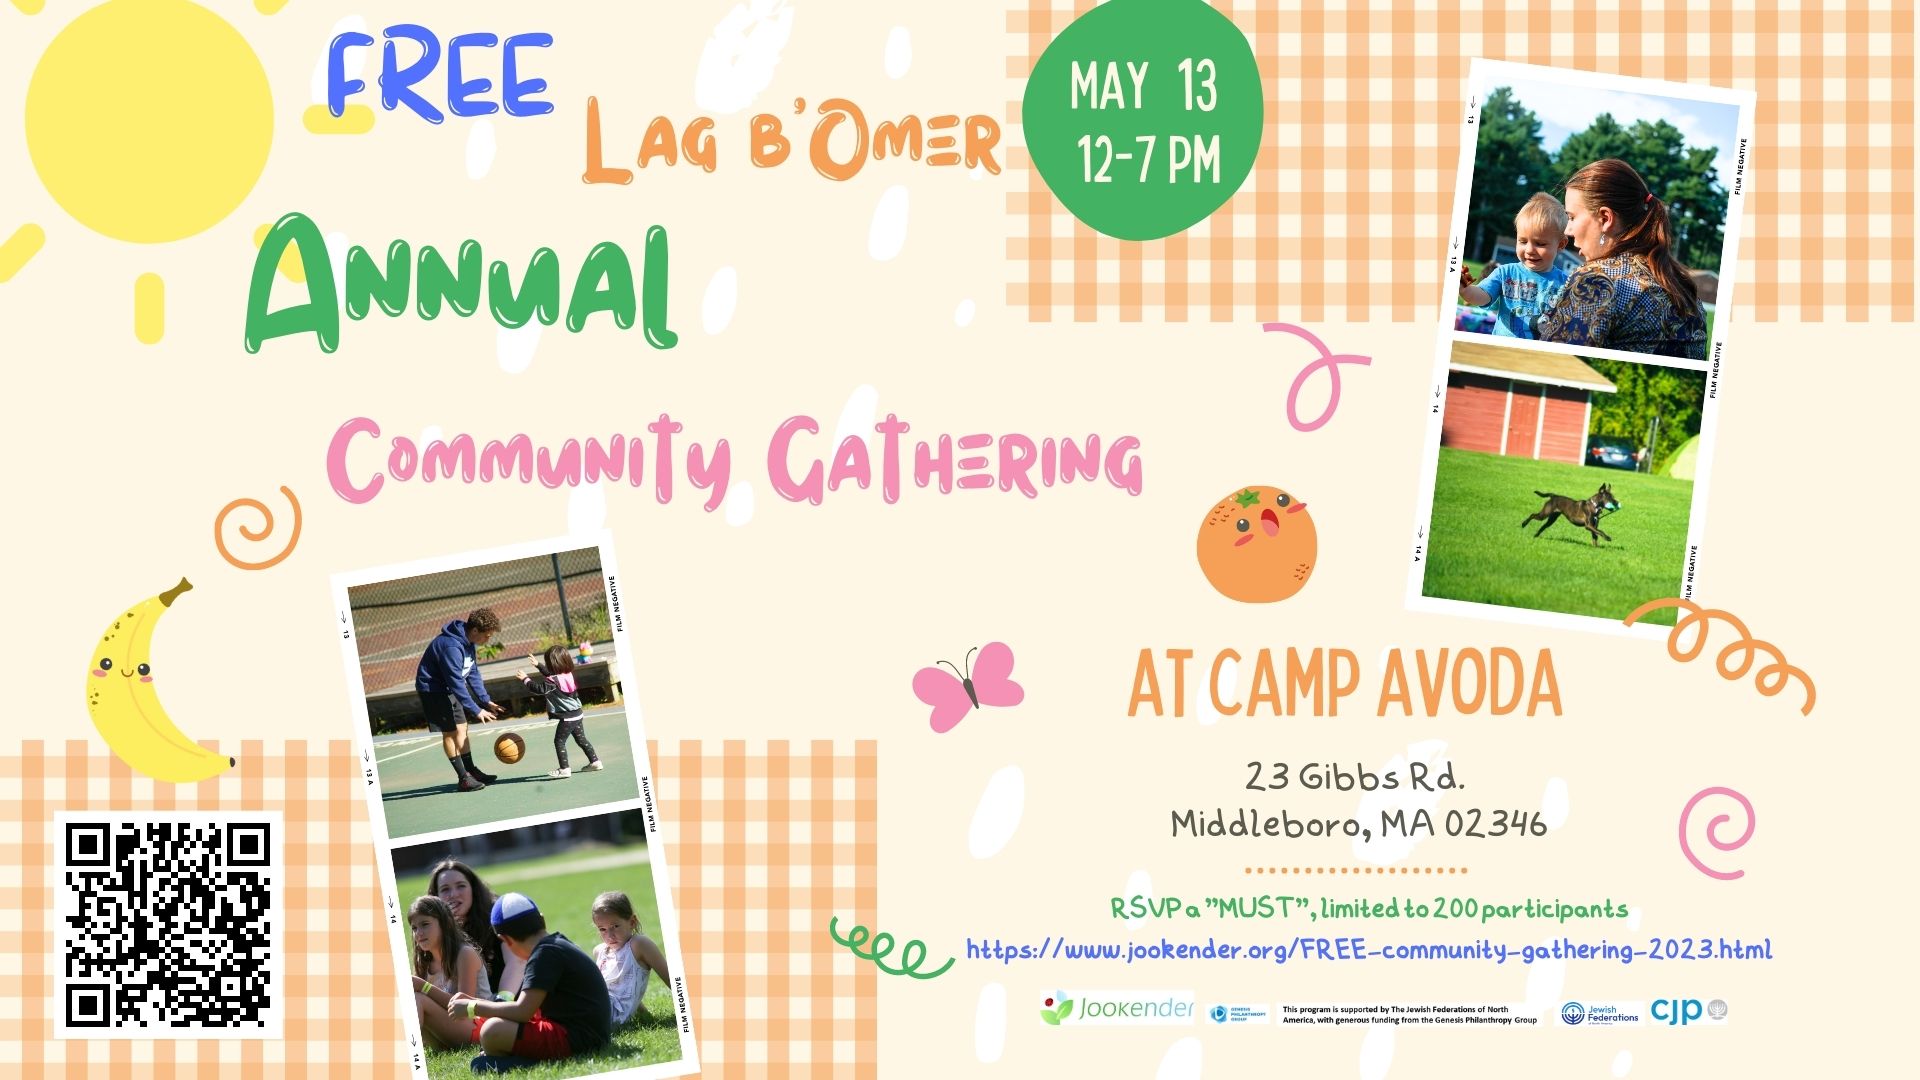 FREE Lag b'Omer Annual Community Gathering